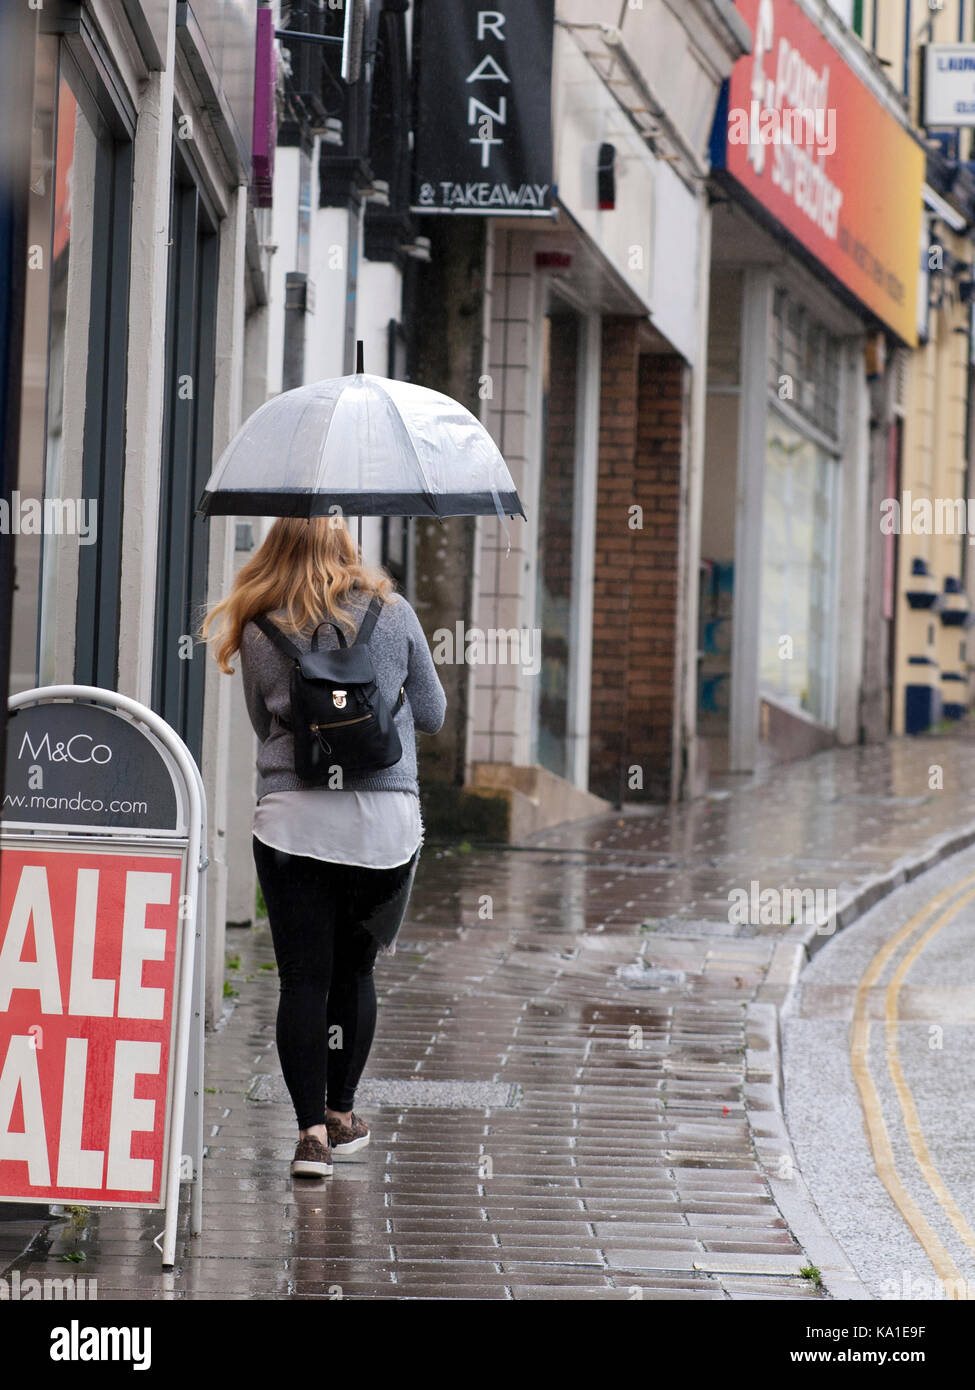 Lady walking up Bideford High Street in the rain carrying an umbrella Stock Photo